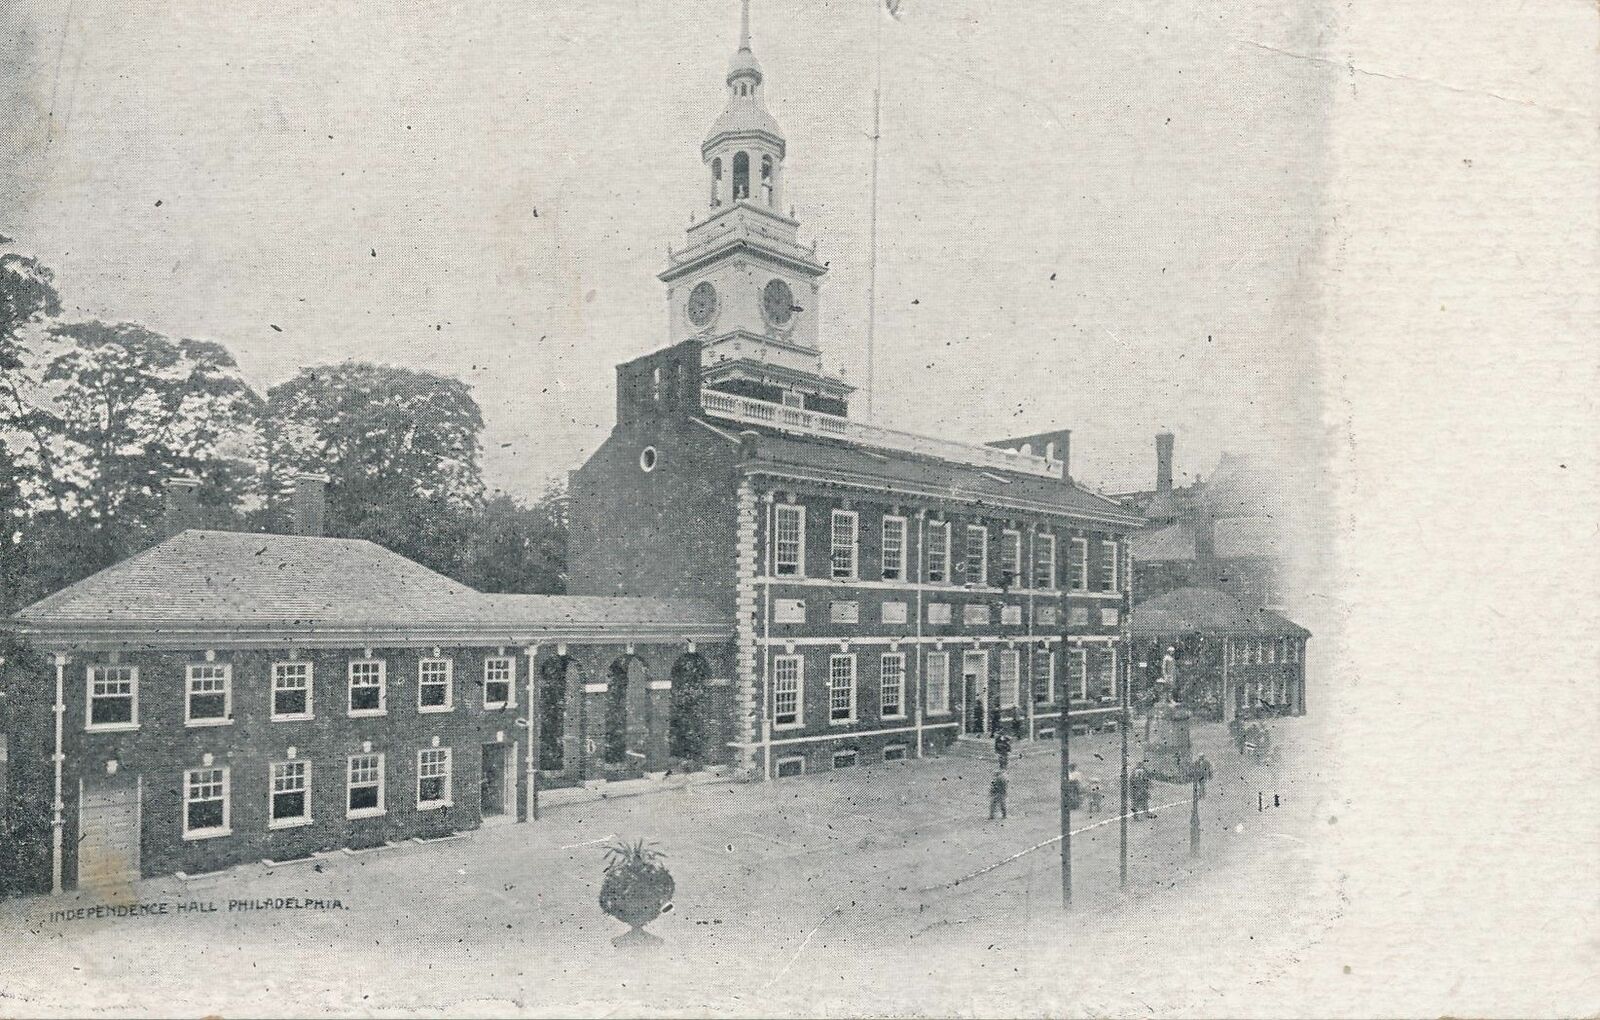 PHILADELPHIA PA - Independence Hall - udb (pre 1908)